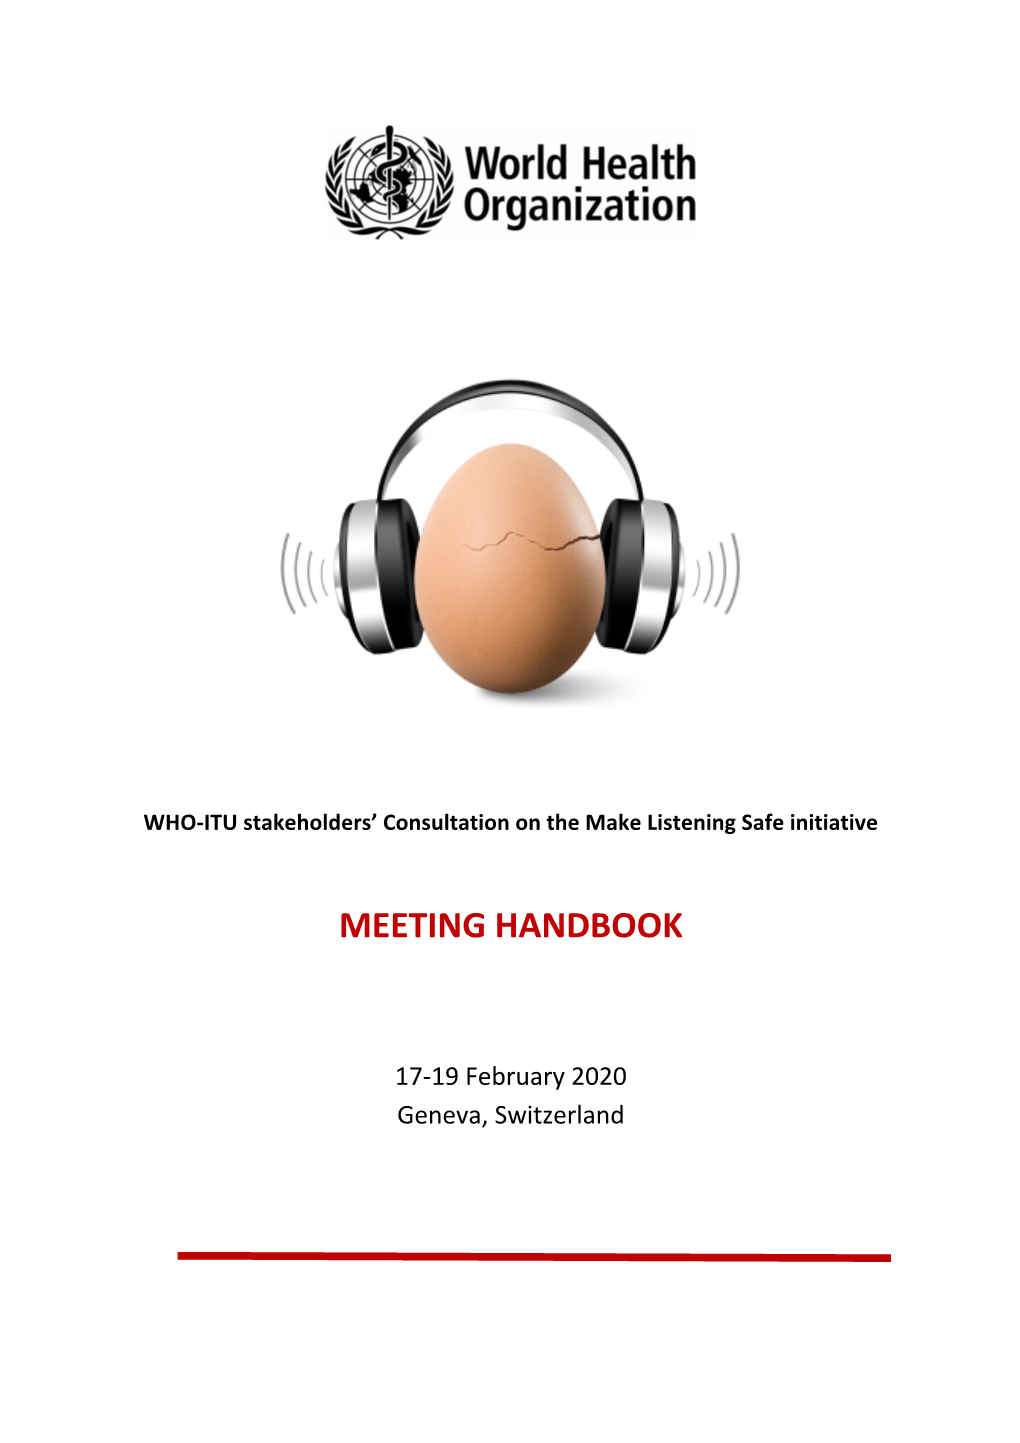 Meeting Handbook